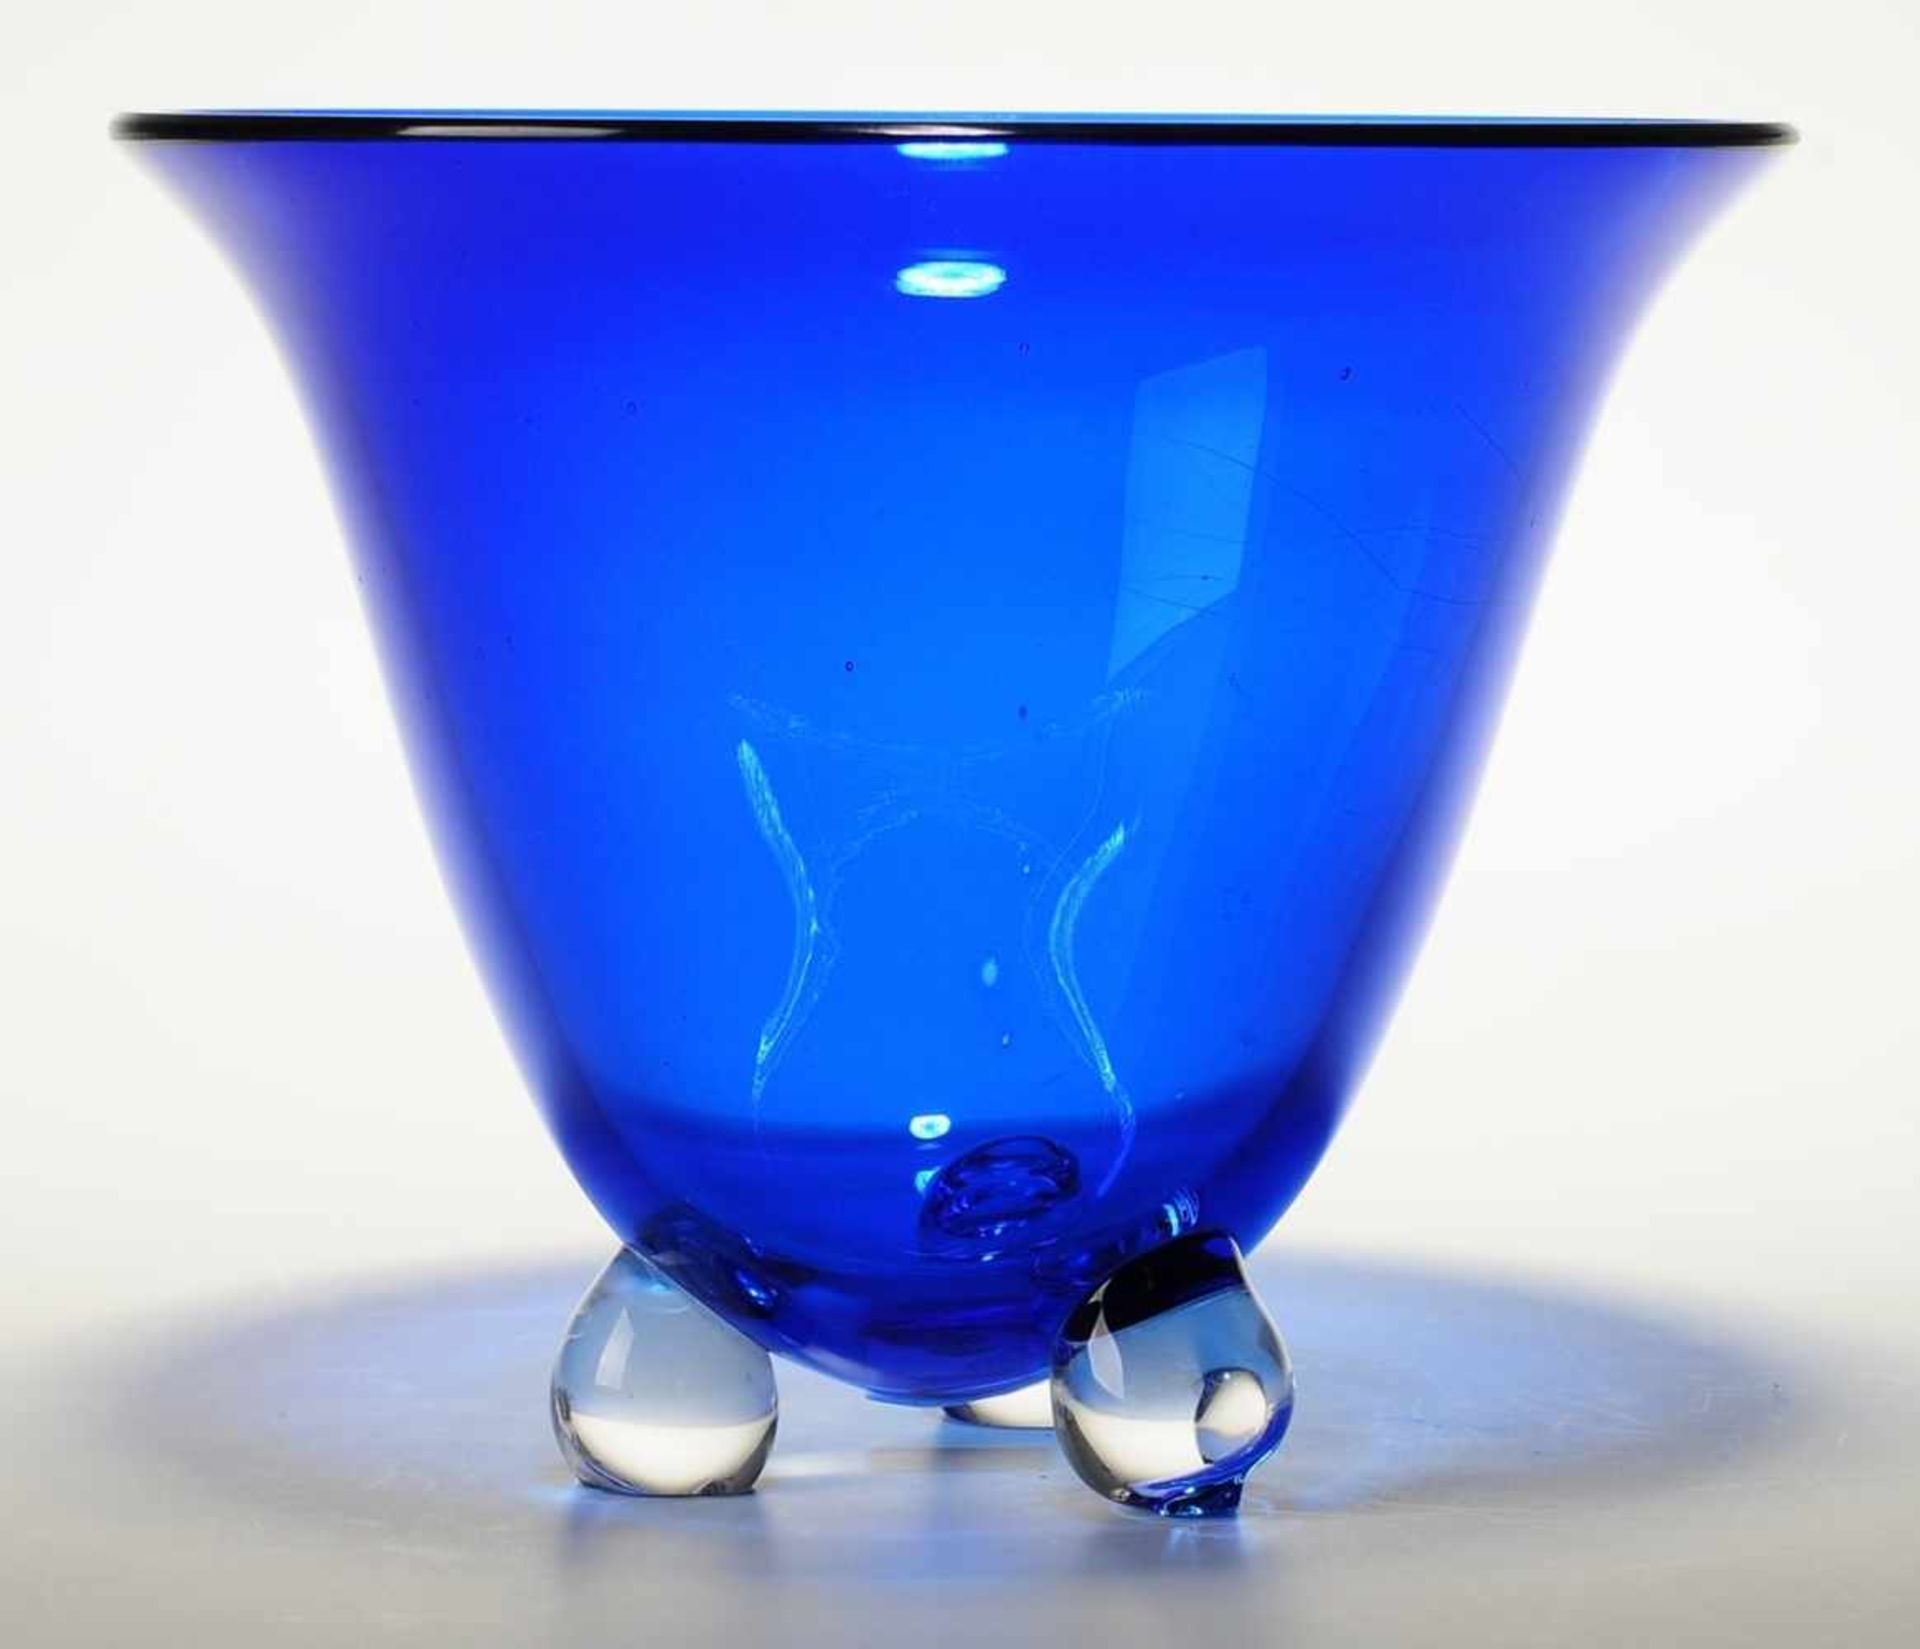 Tango-Vase Farbloses Glas, kobaltblau überfangen. Formgeblasen. Glockenförmiger Korpus auf 3